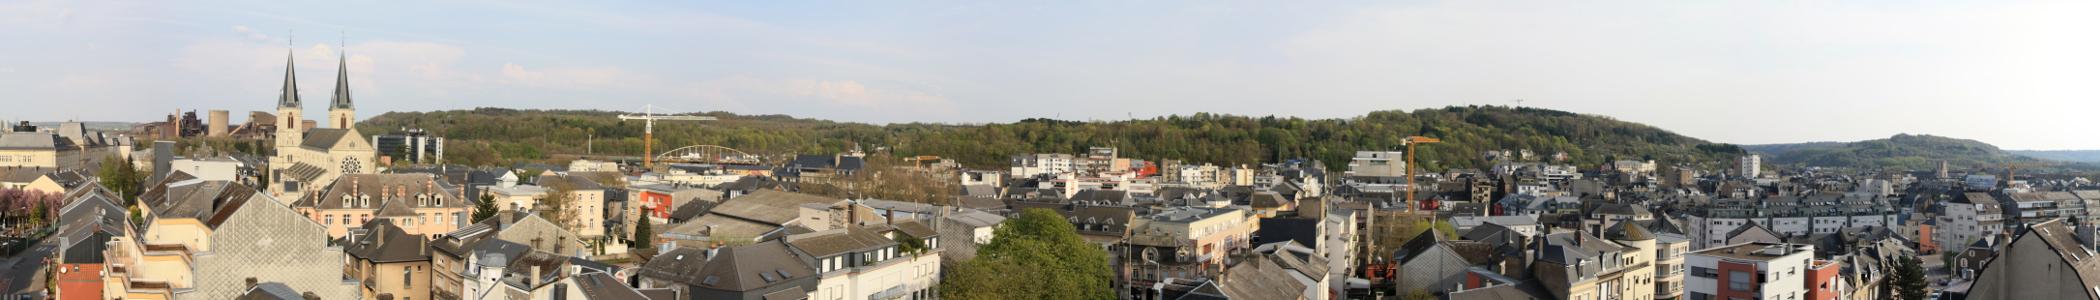 Banner image for Esch-sur-Alzette on GigsGuide